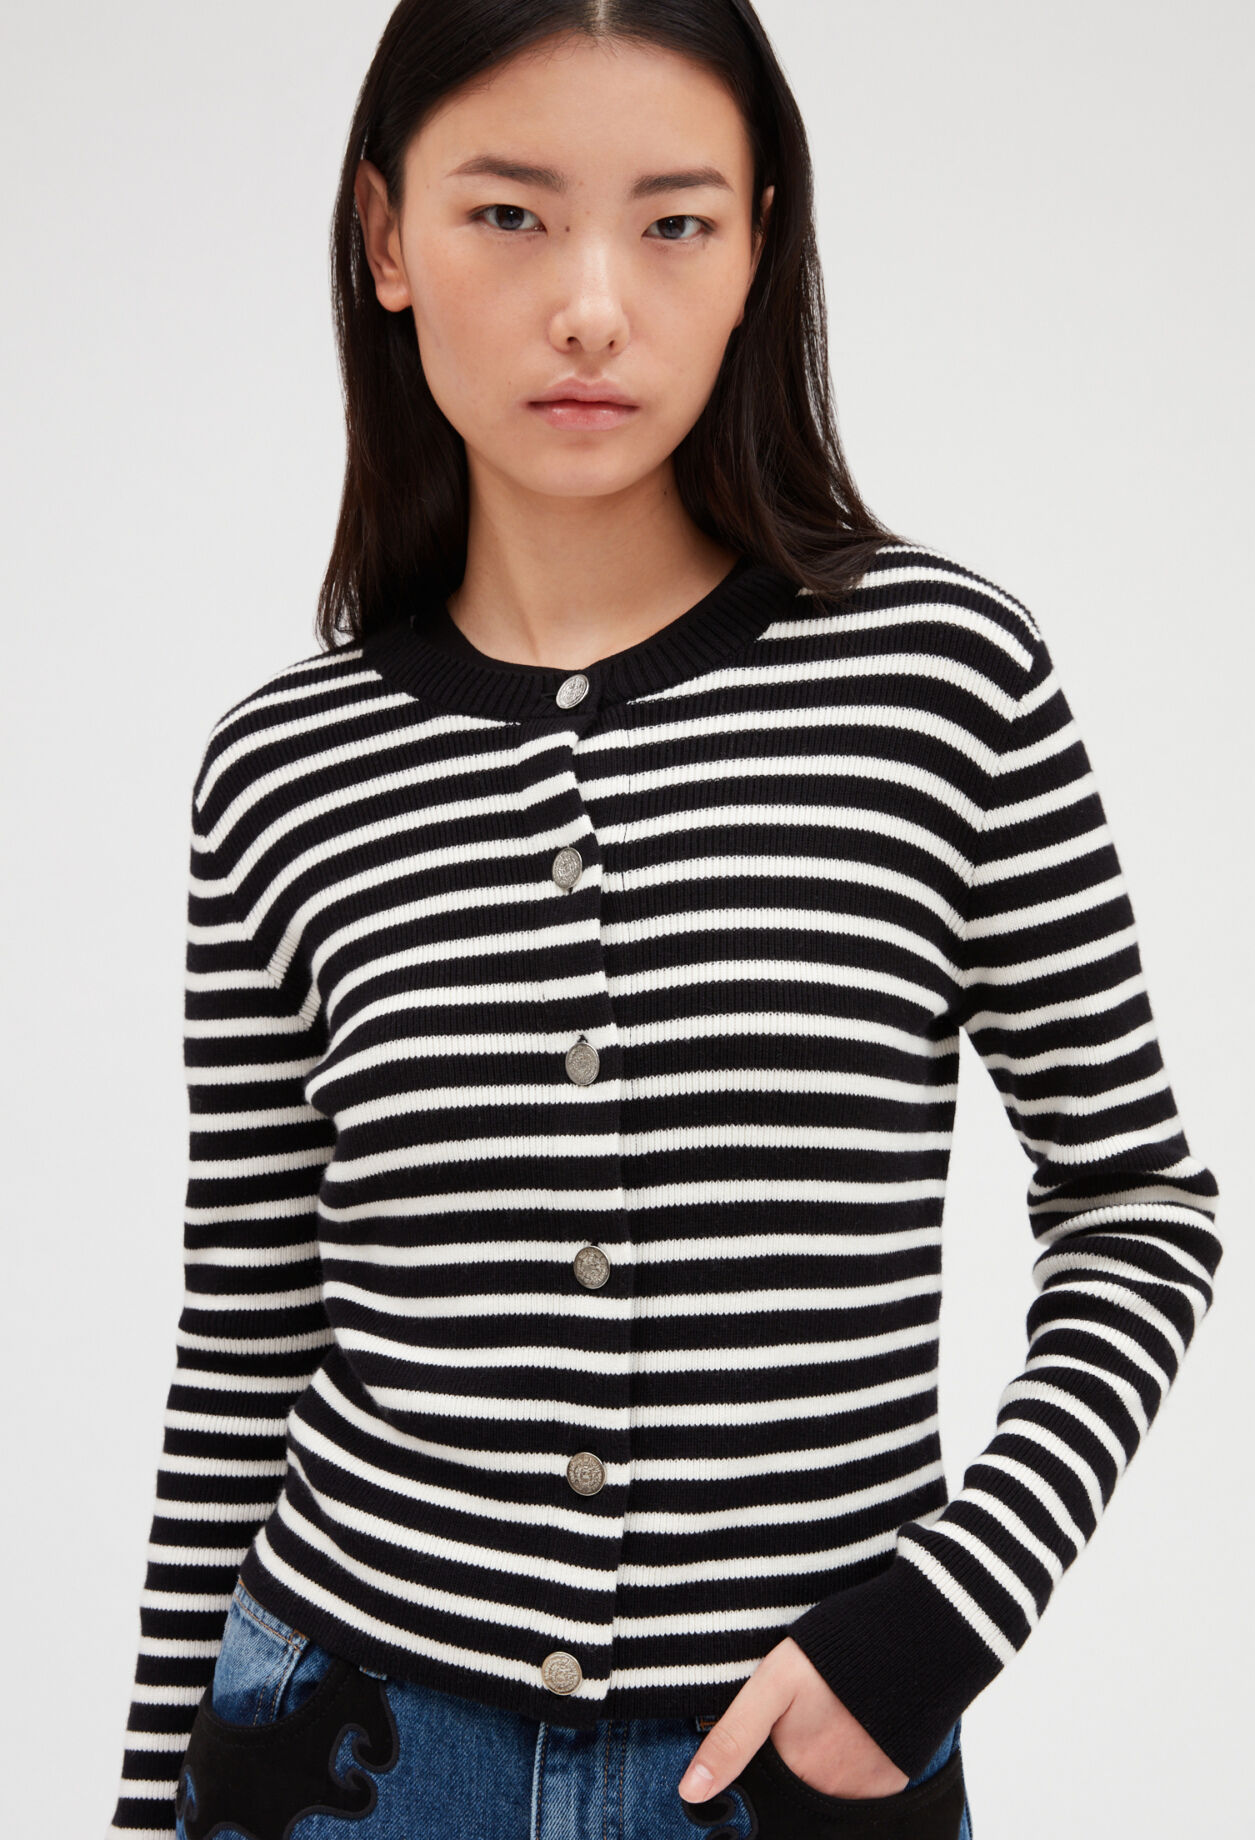 Striped knitwear cardigan